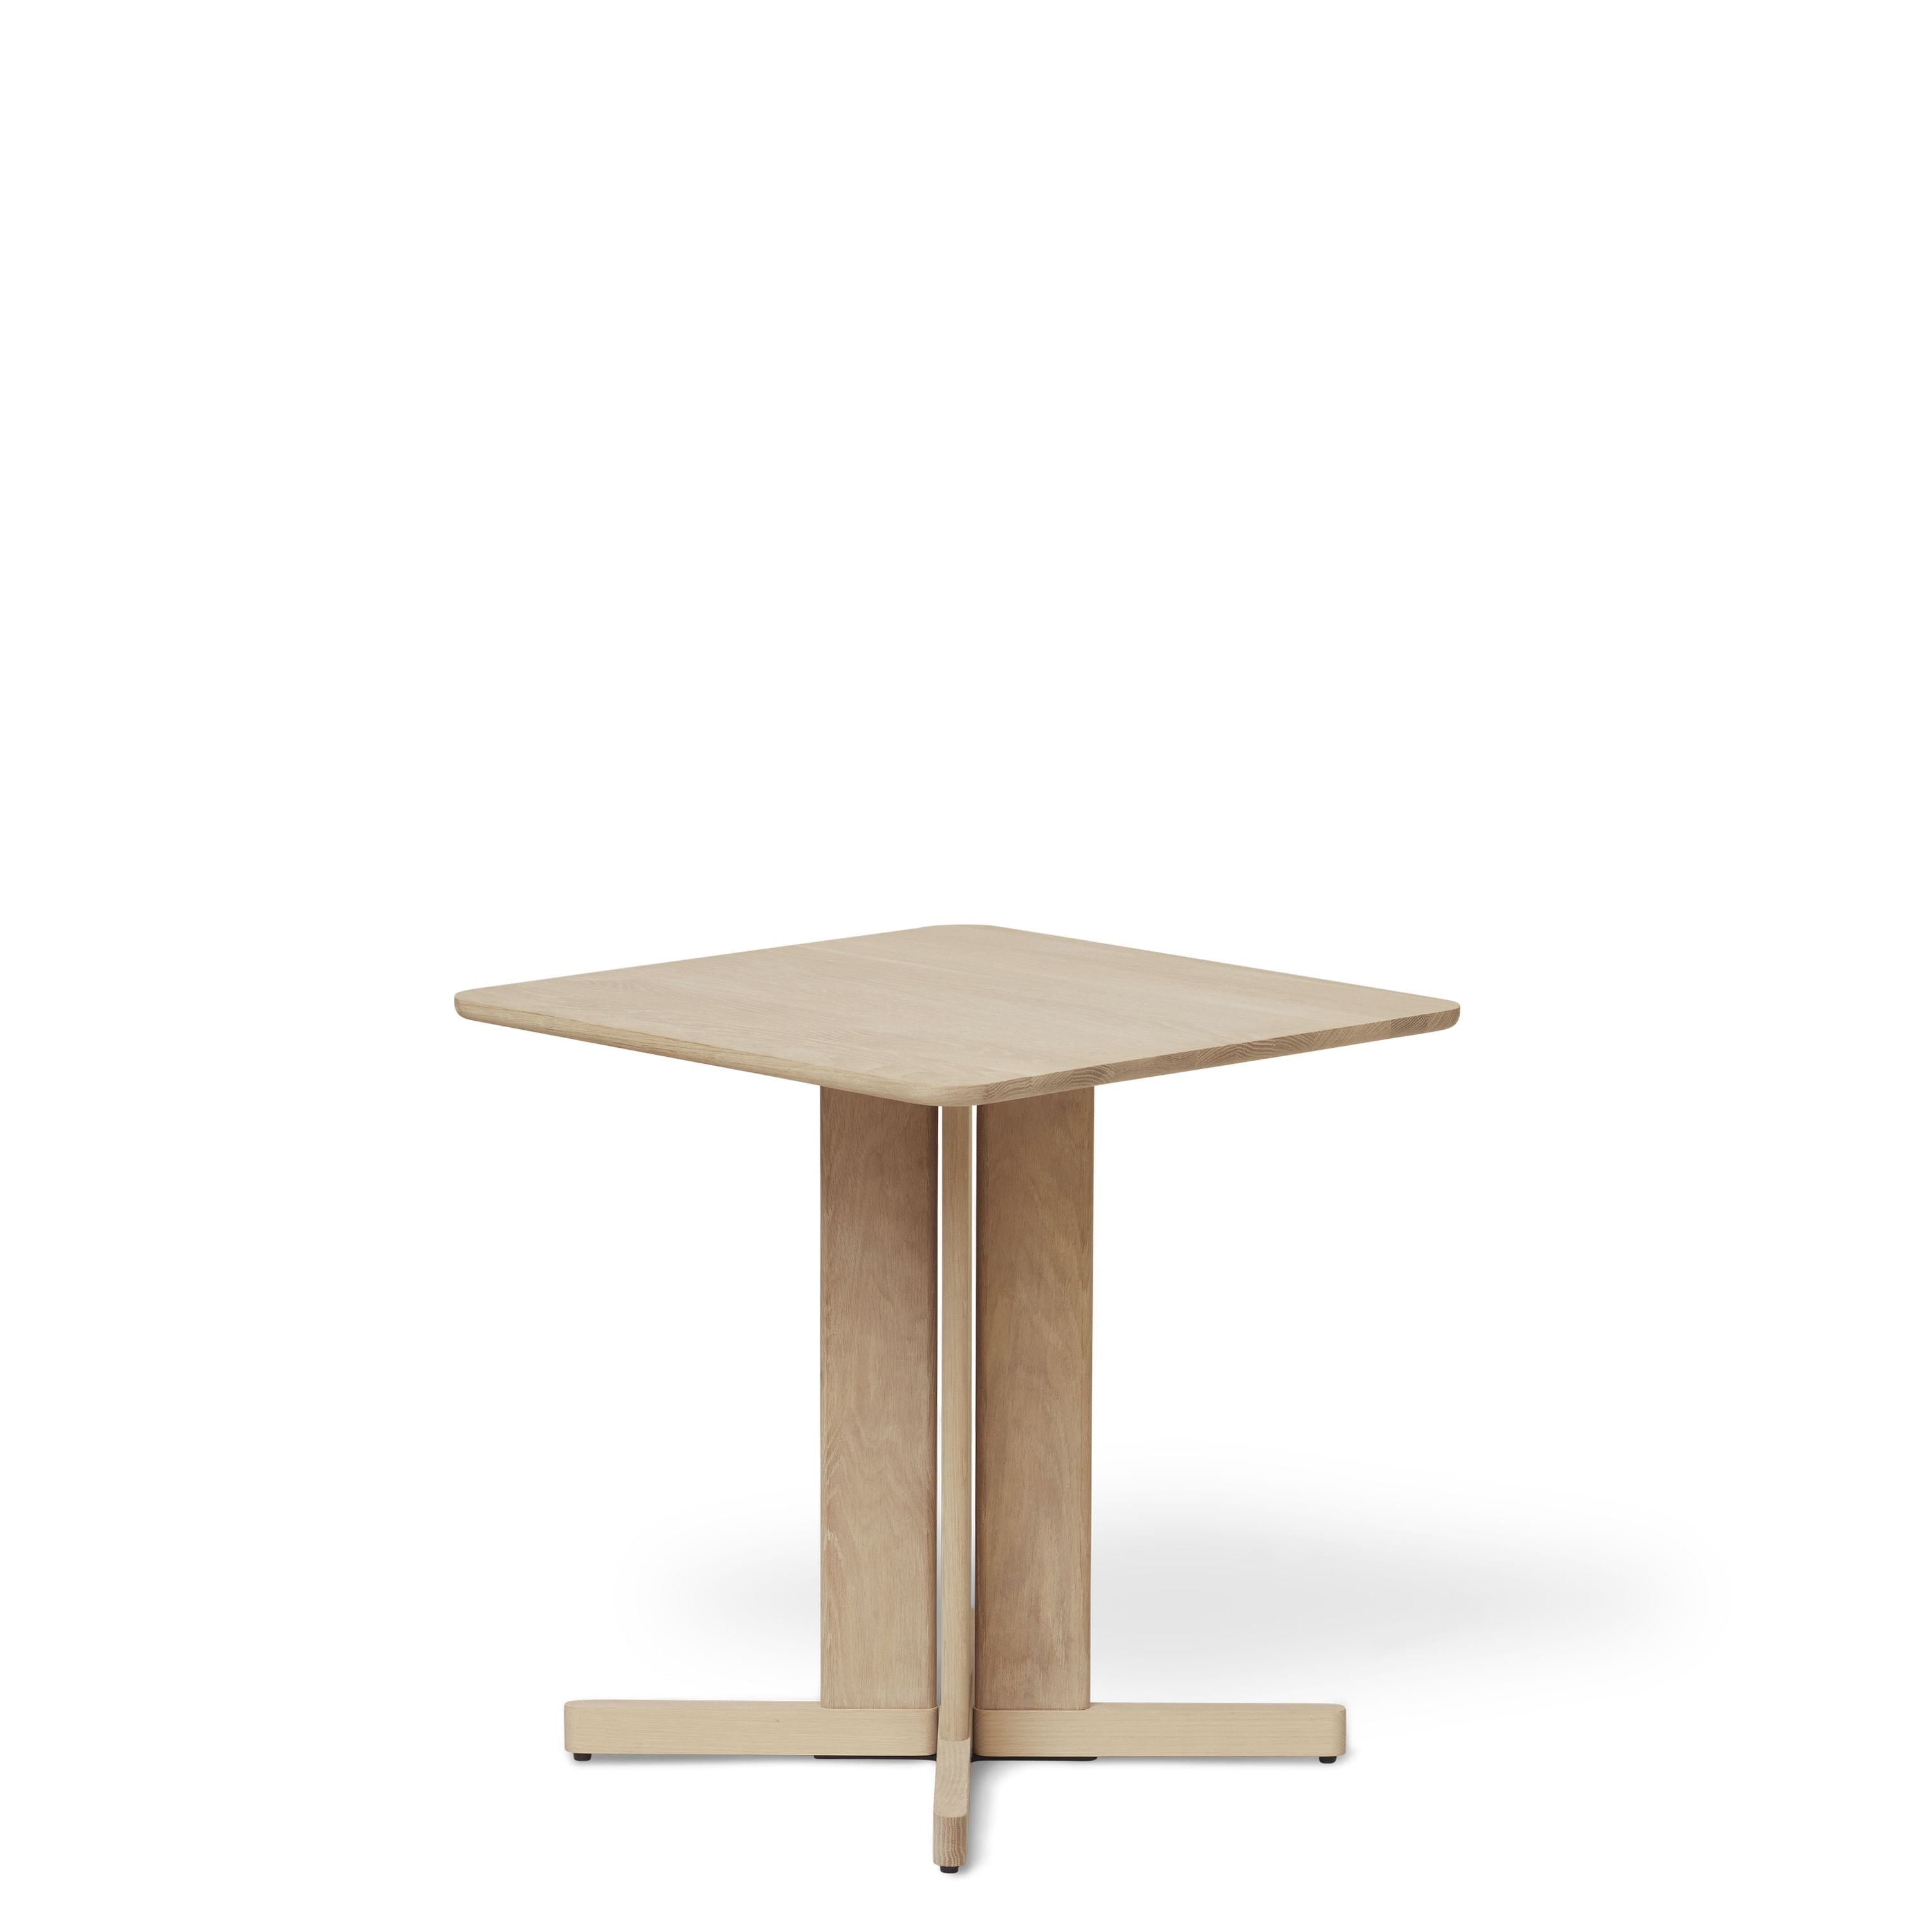 Form & Refine QuatRefoil Tabelle 68x68 cm. weiße Eiche